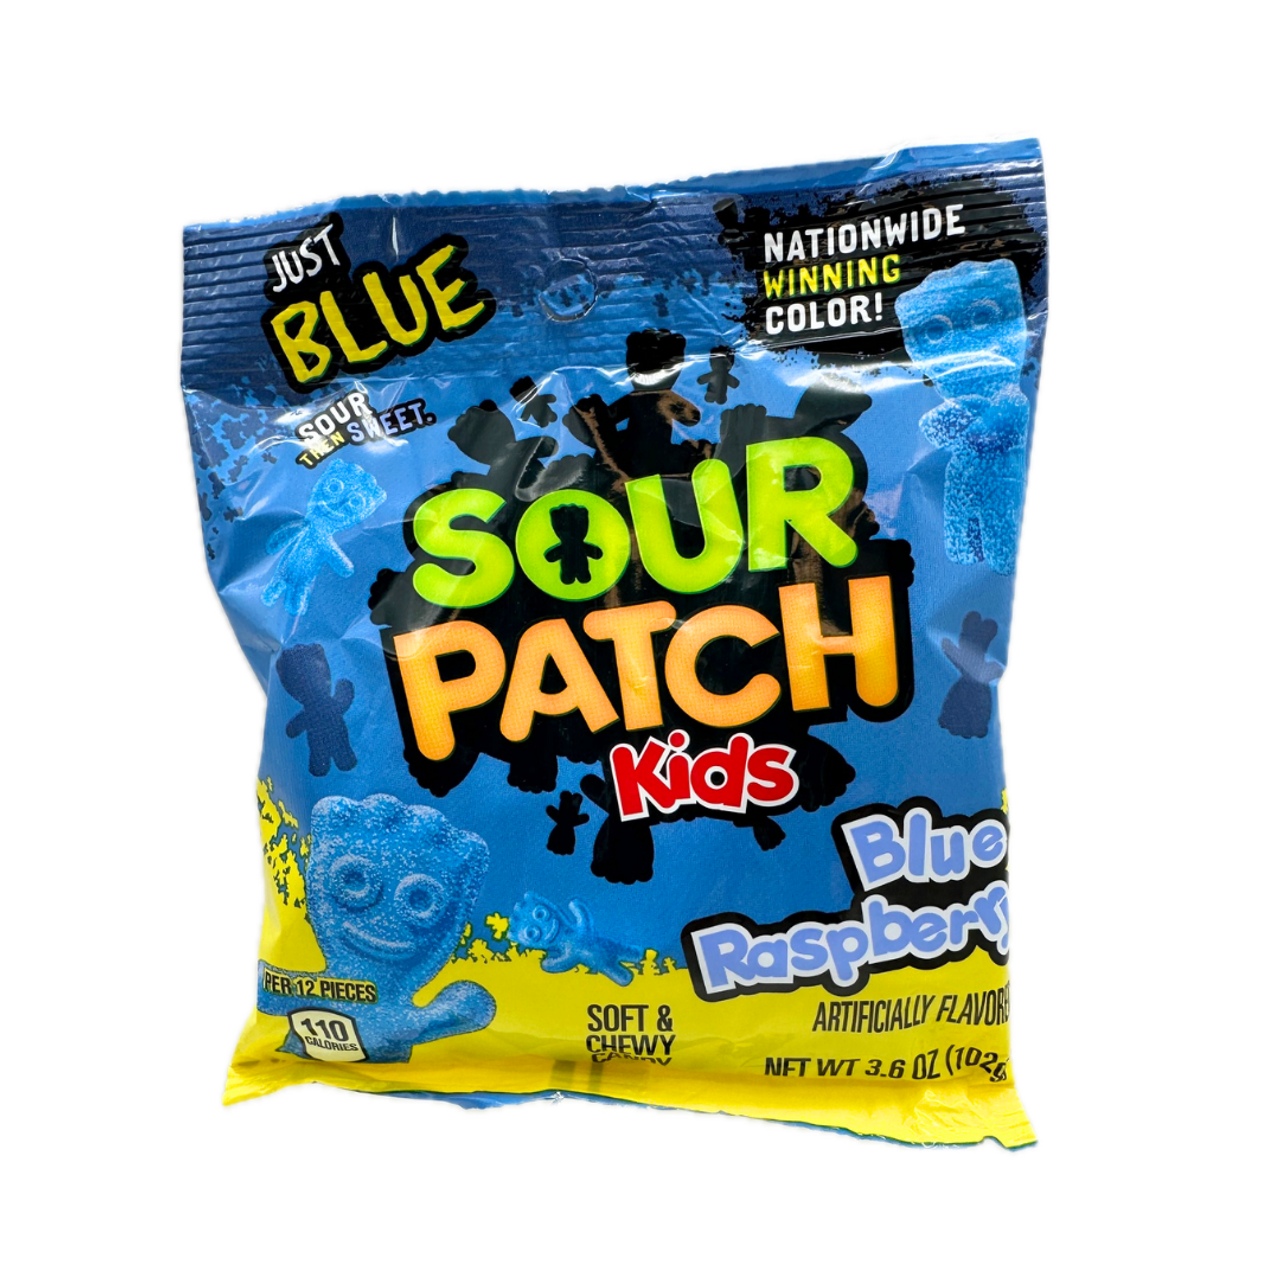 Sour Patch Kids - Blue Raspberry Chewy Candy, 3.6 oz.